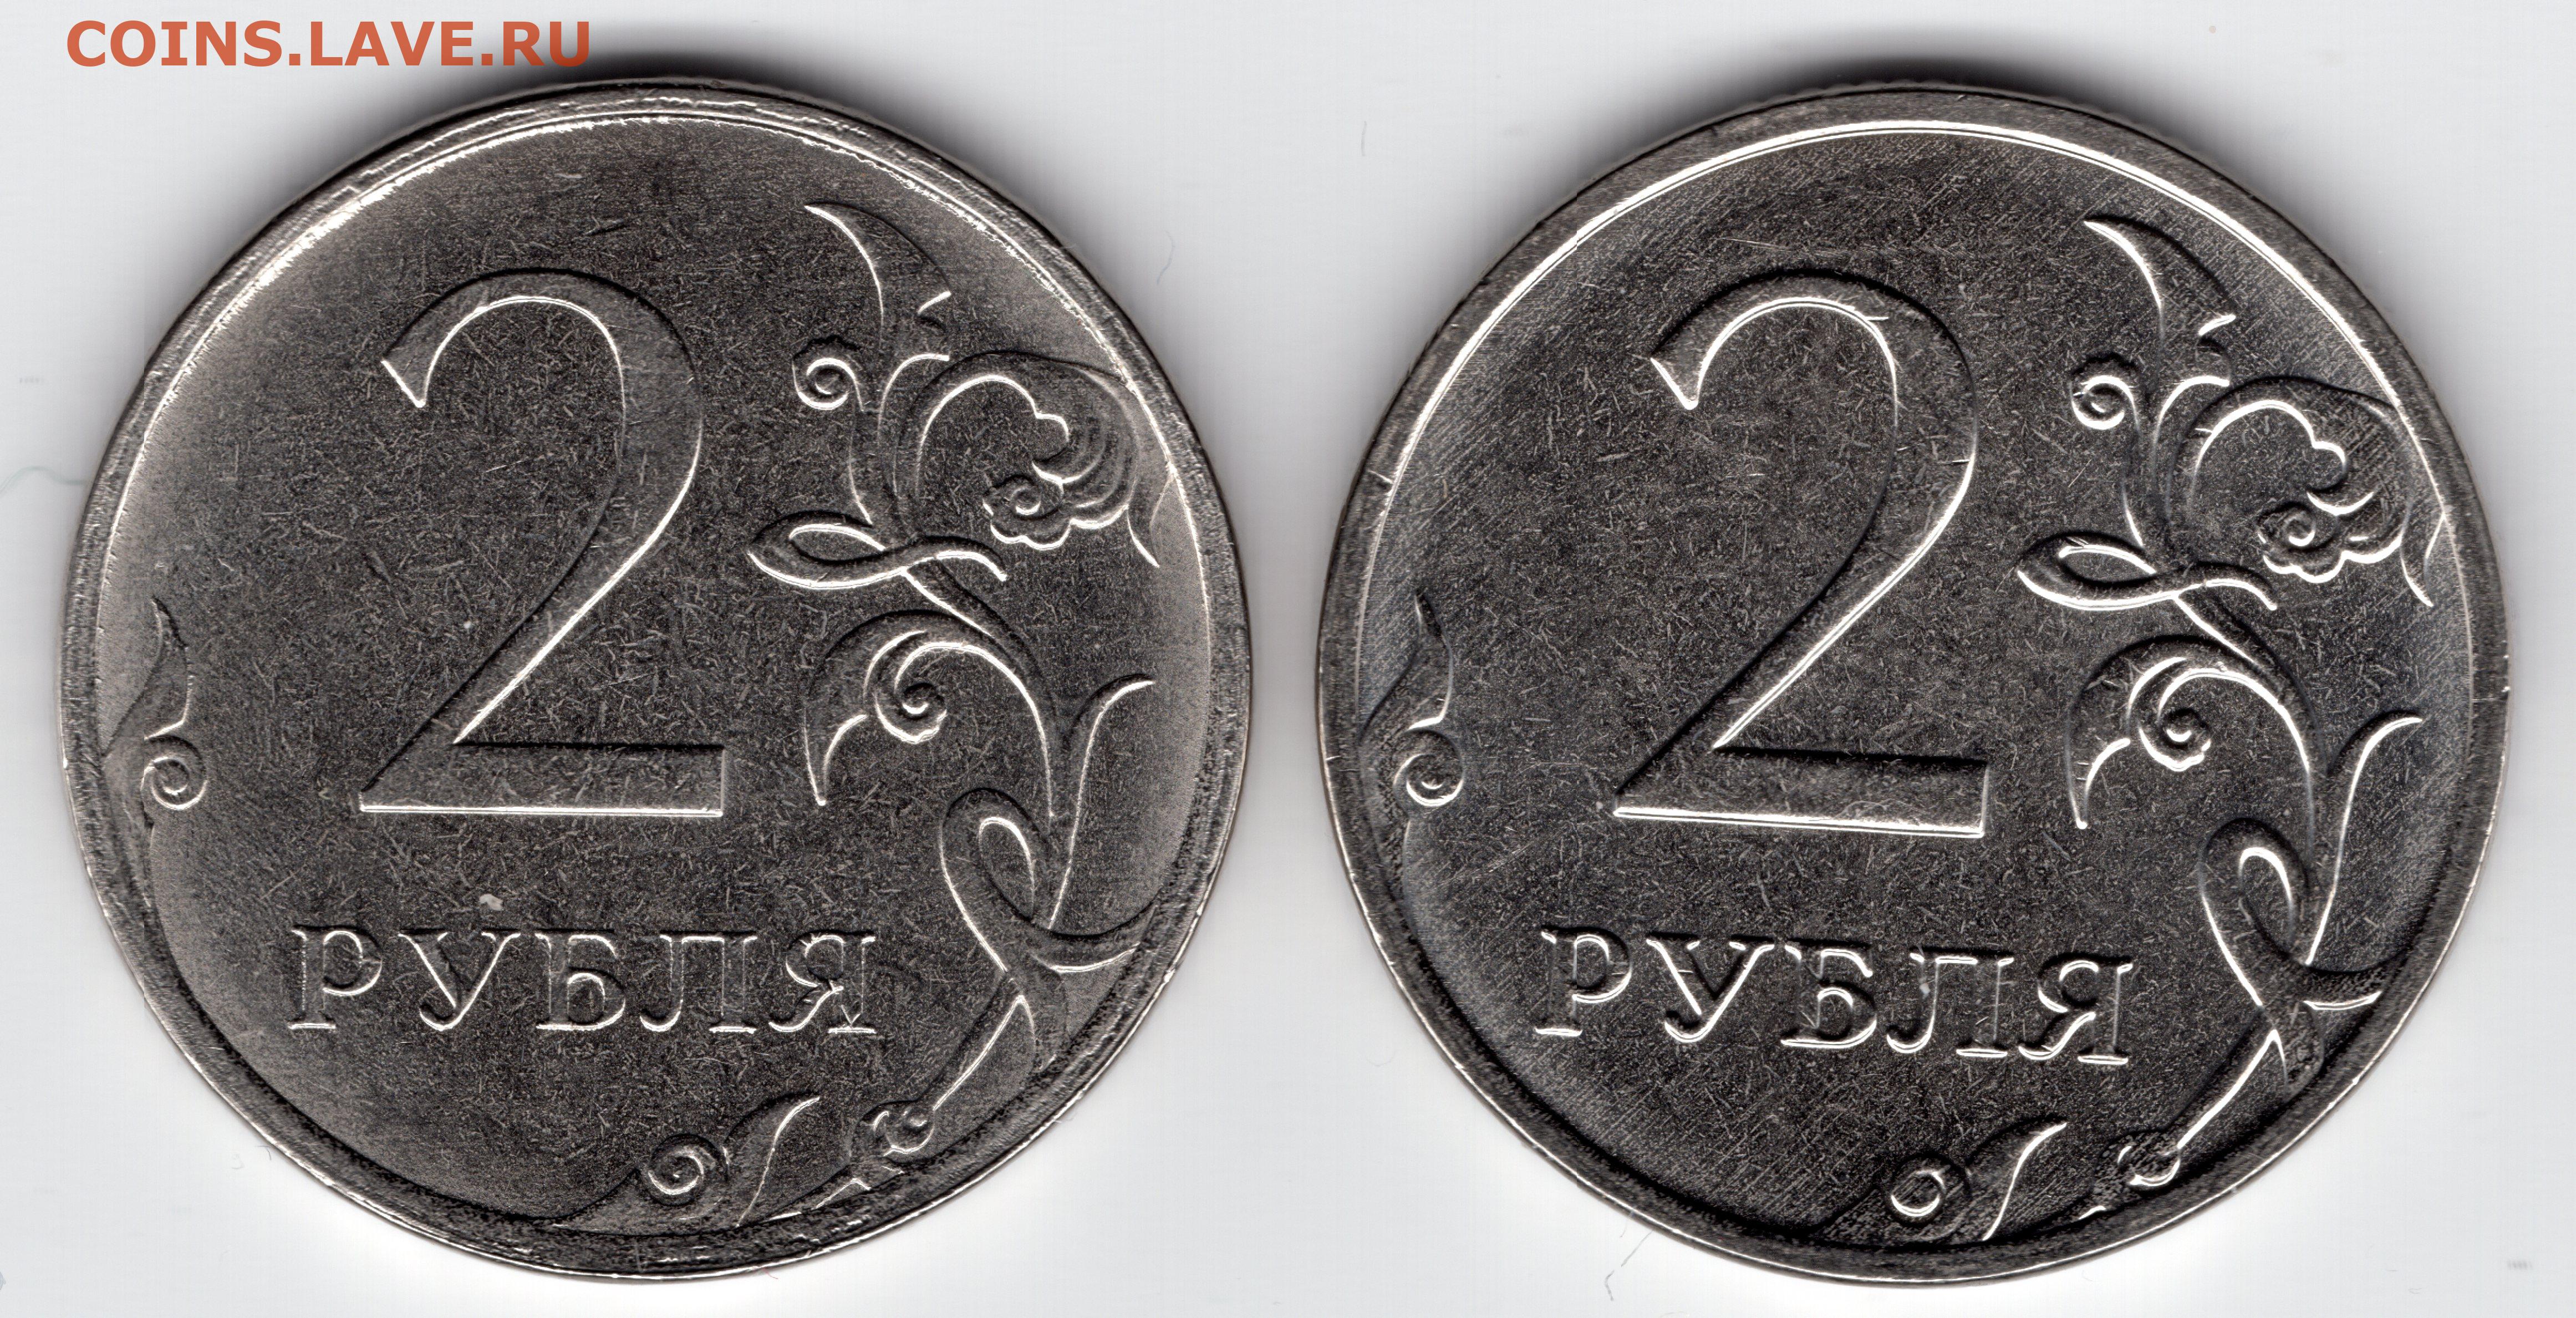 80 рублей в месяц. Монета два рубля. Брак монеты 5 рублей 2009г. 1 Рубль шт а шт б. 2 Рубля 2012 с браком.